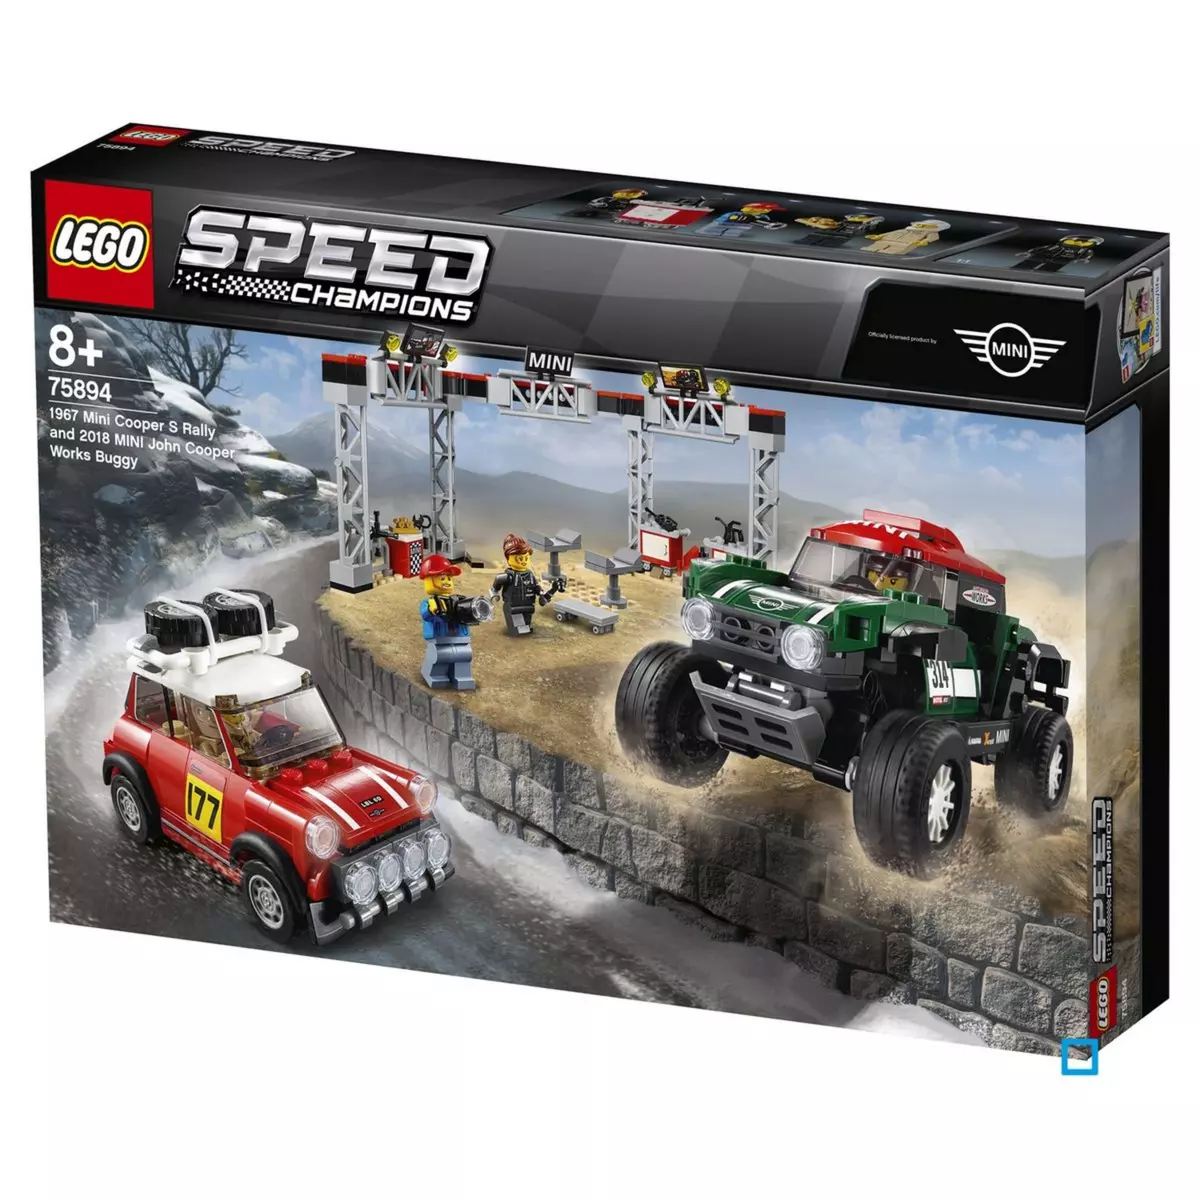 LEGO Speed Champions 75894 - Mini Cooper S Rally 1967 et Mini John Cooper Works Buggy